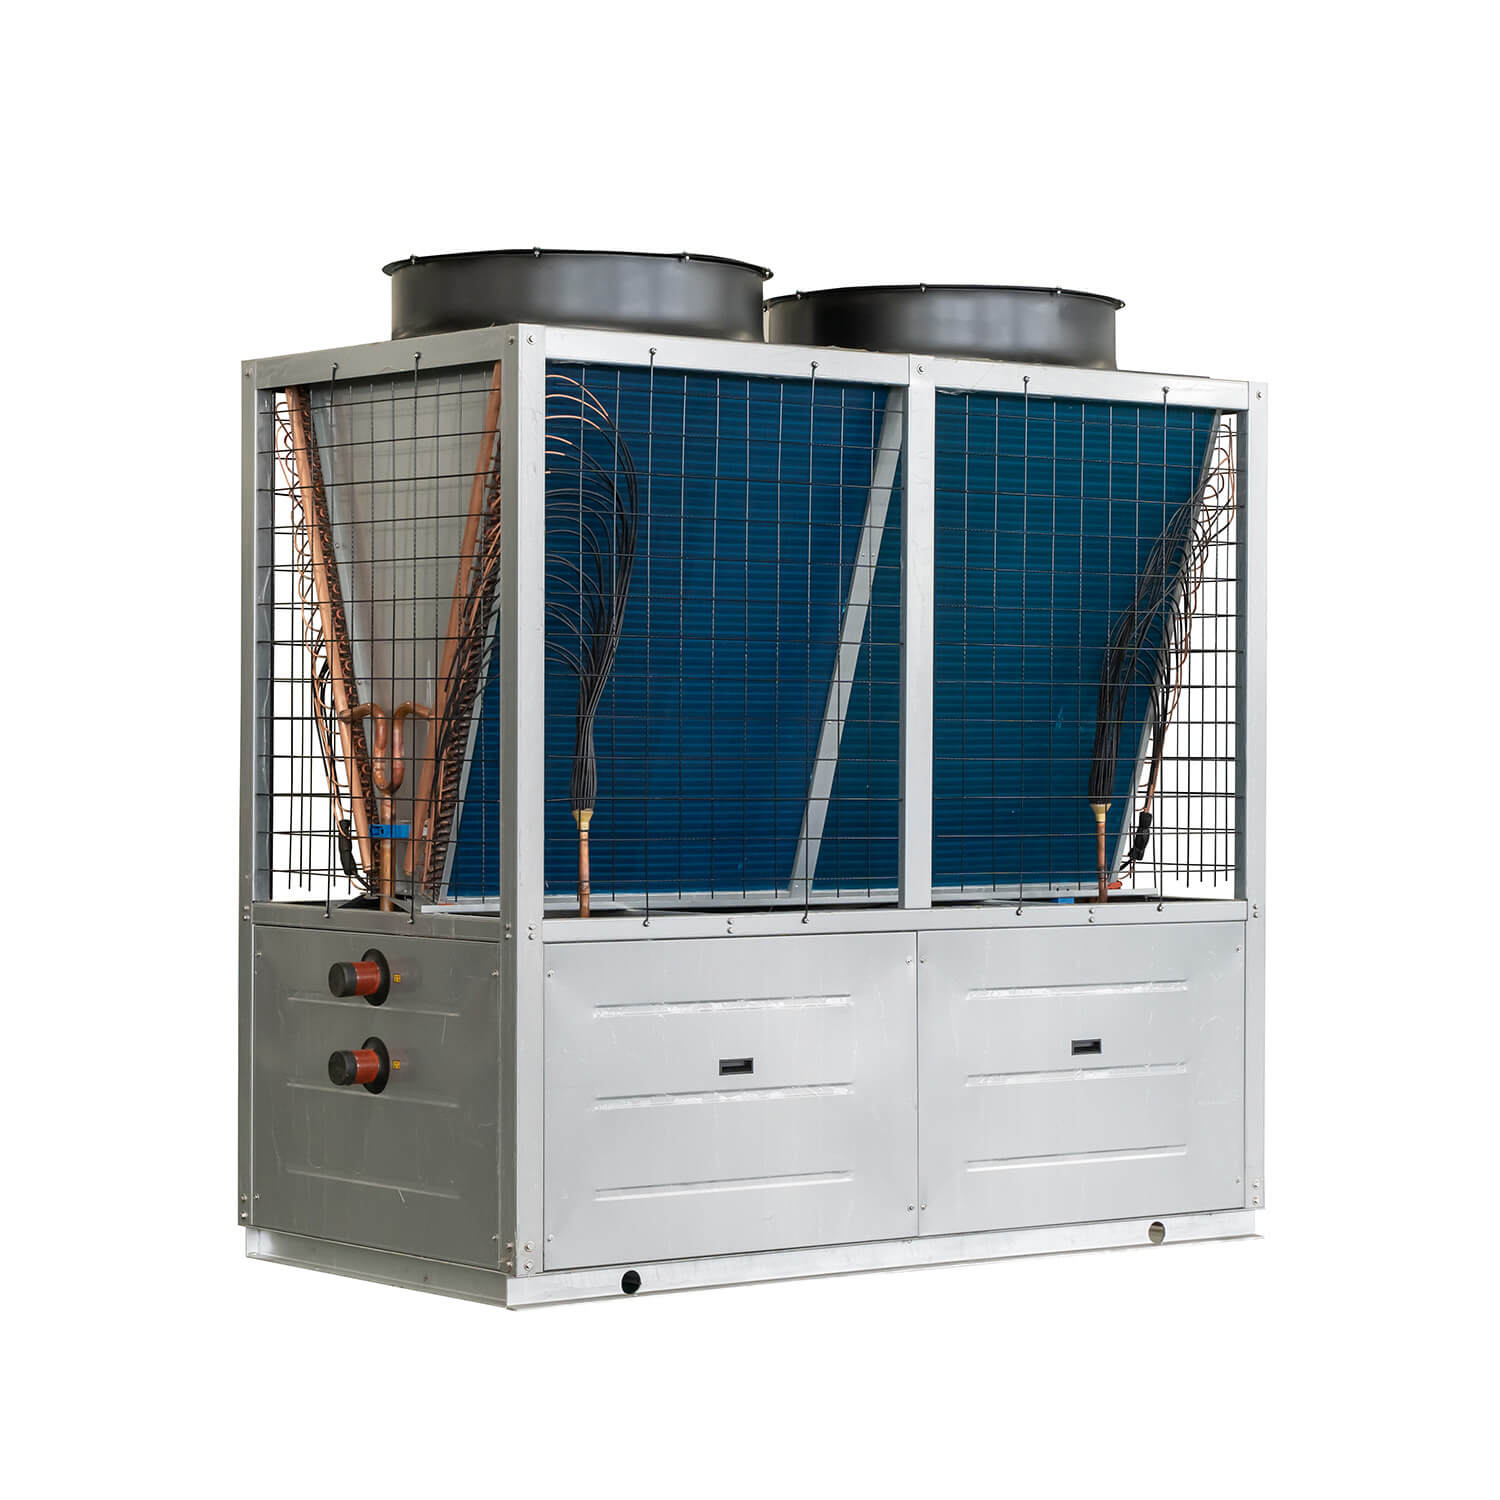 Industriestandard-Wasserkühler, luftgekühlter Scroll-Kühler